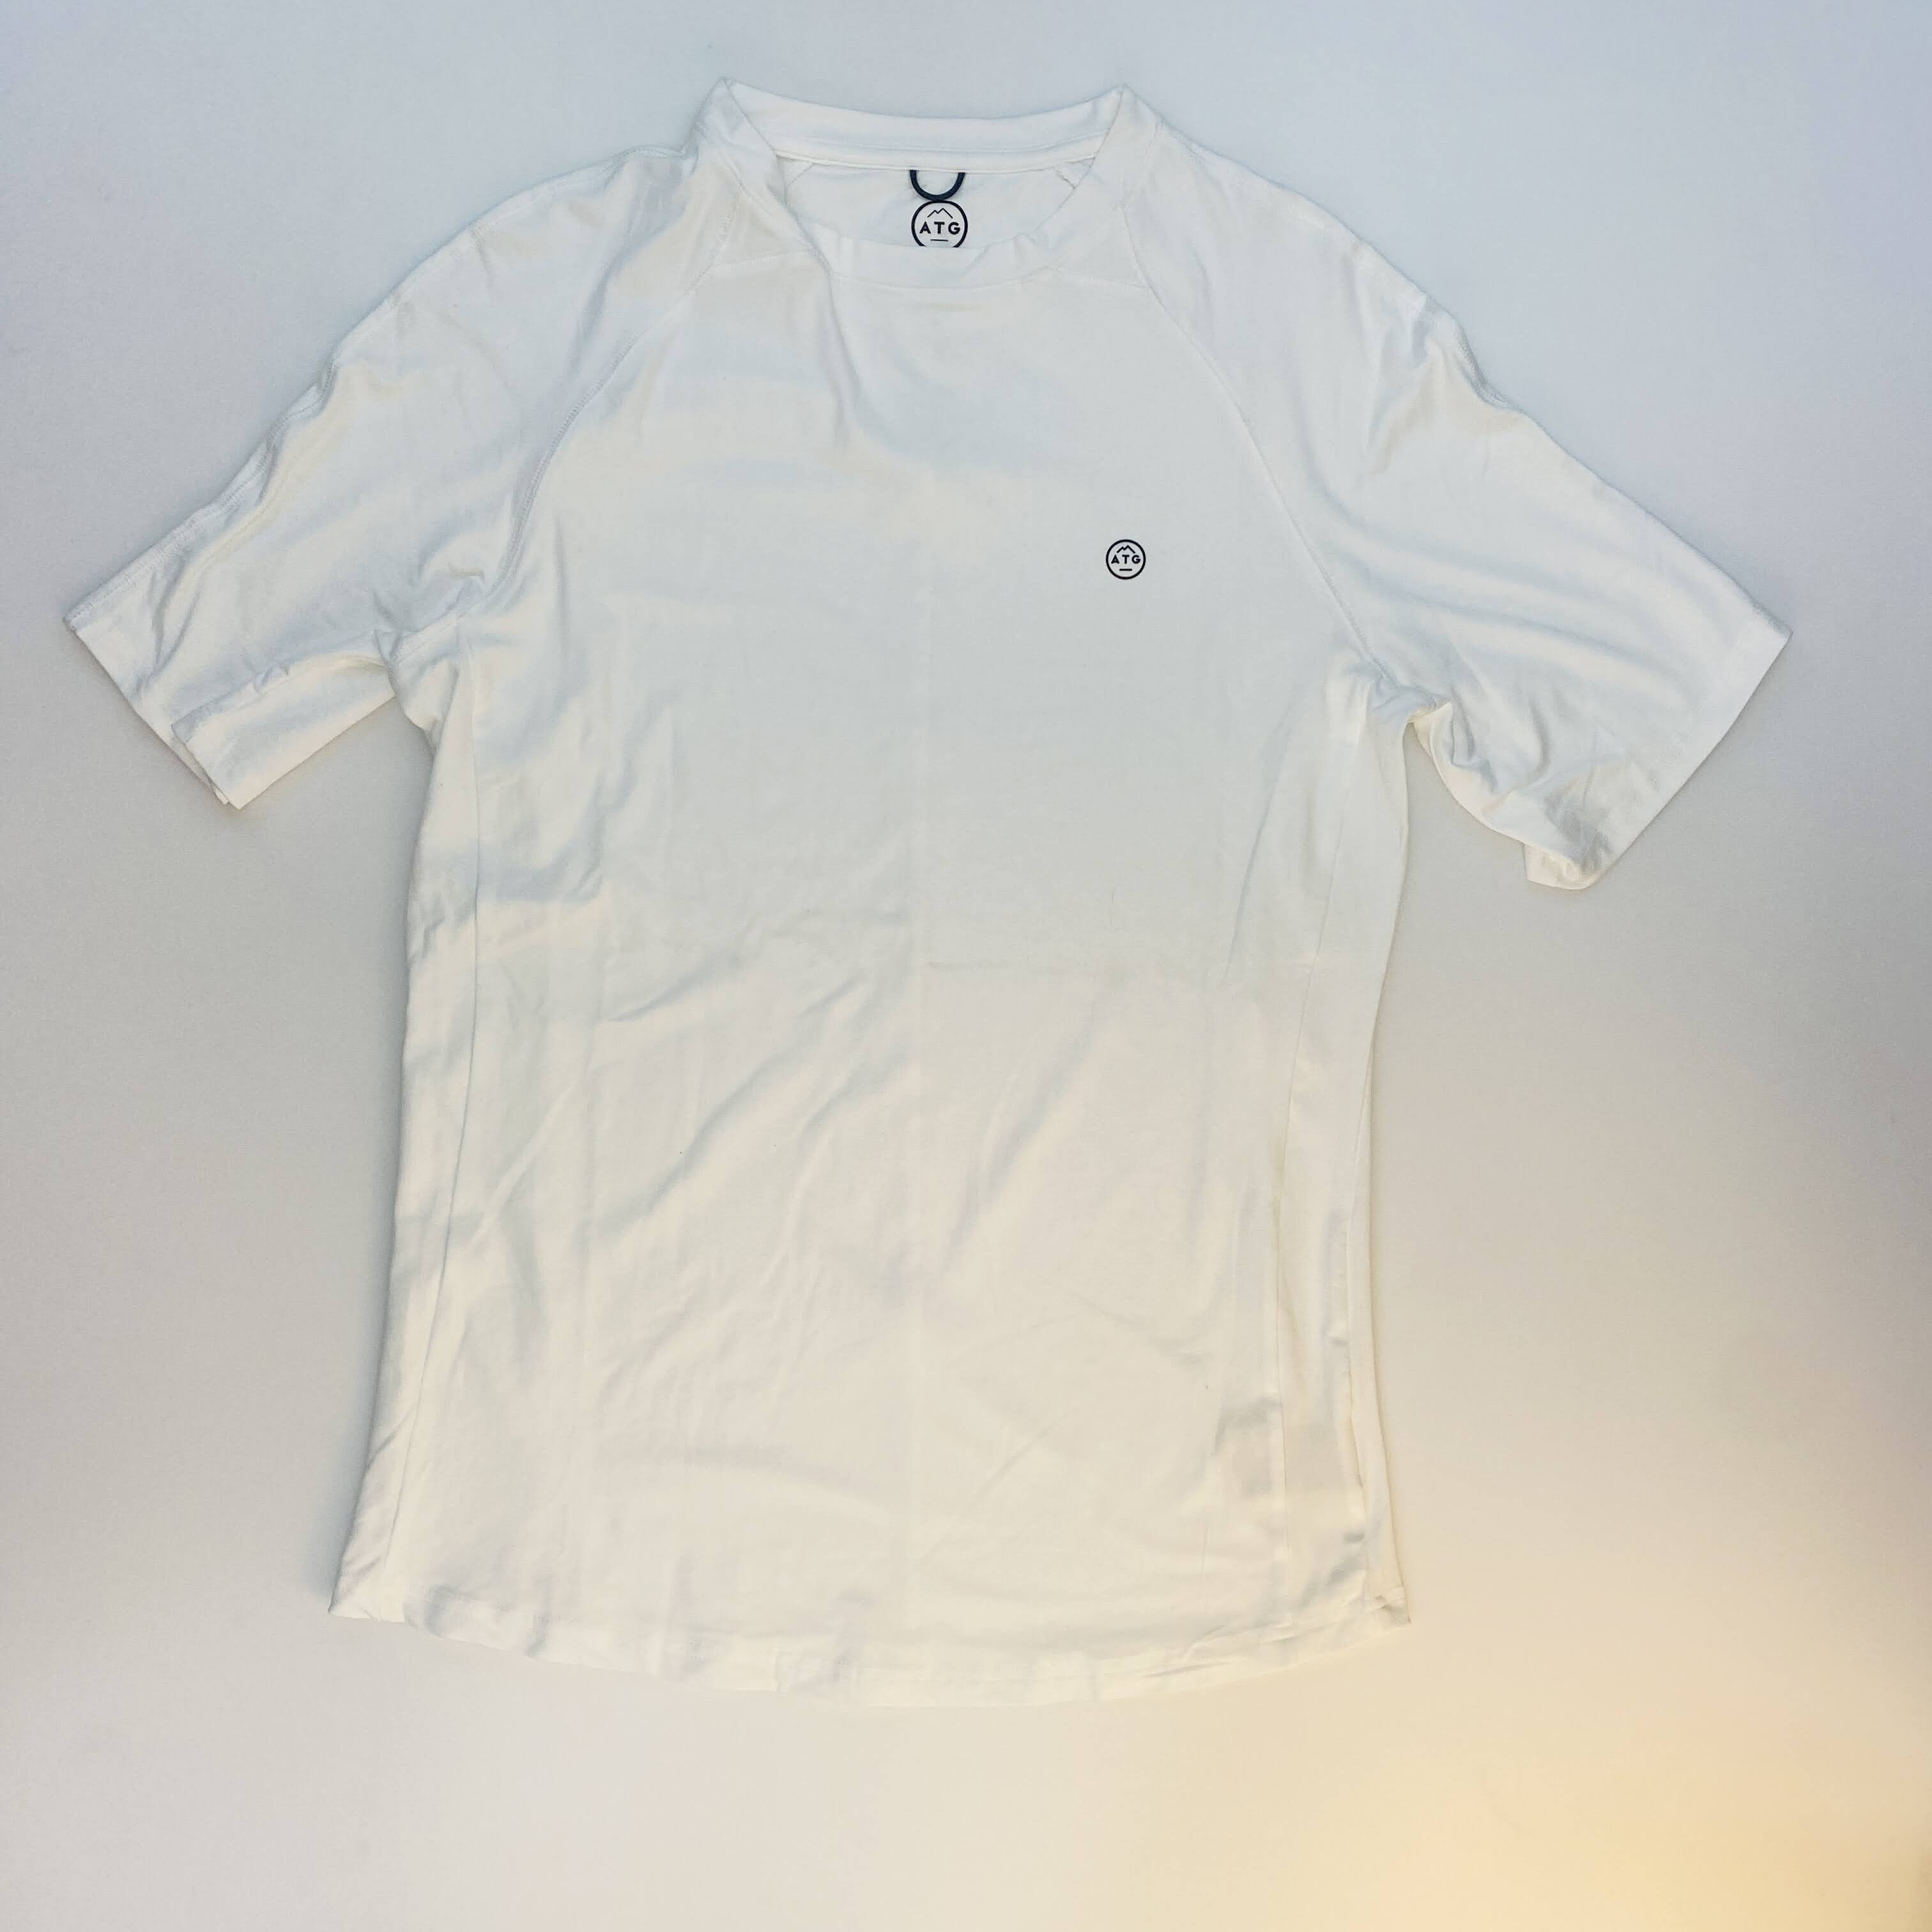 Wrangler Ss Performance T Shirt - T-shirt di seconda mano - Uomo - Bianco - S | Hardloop